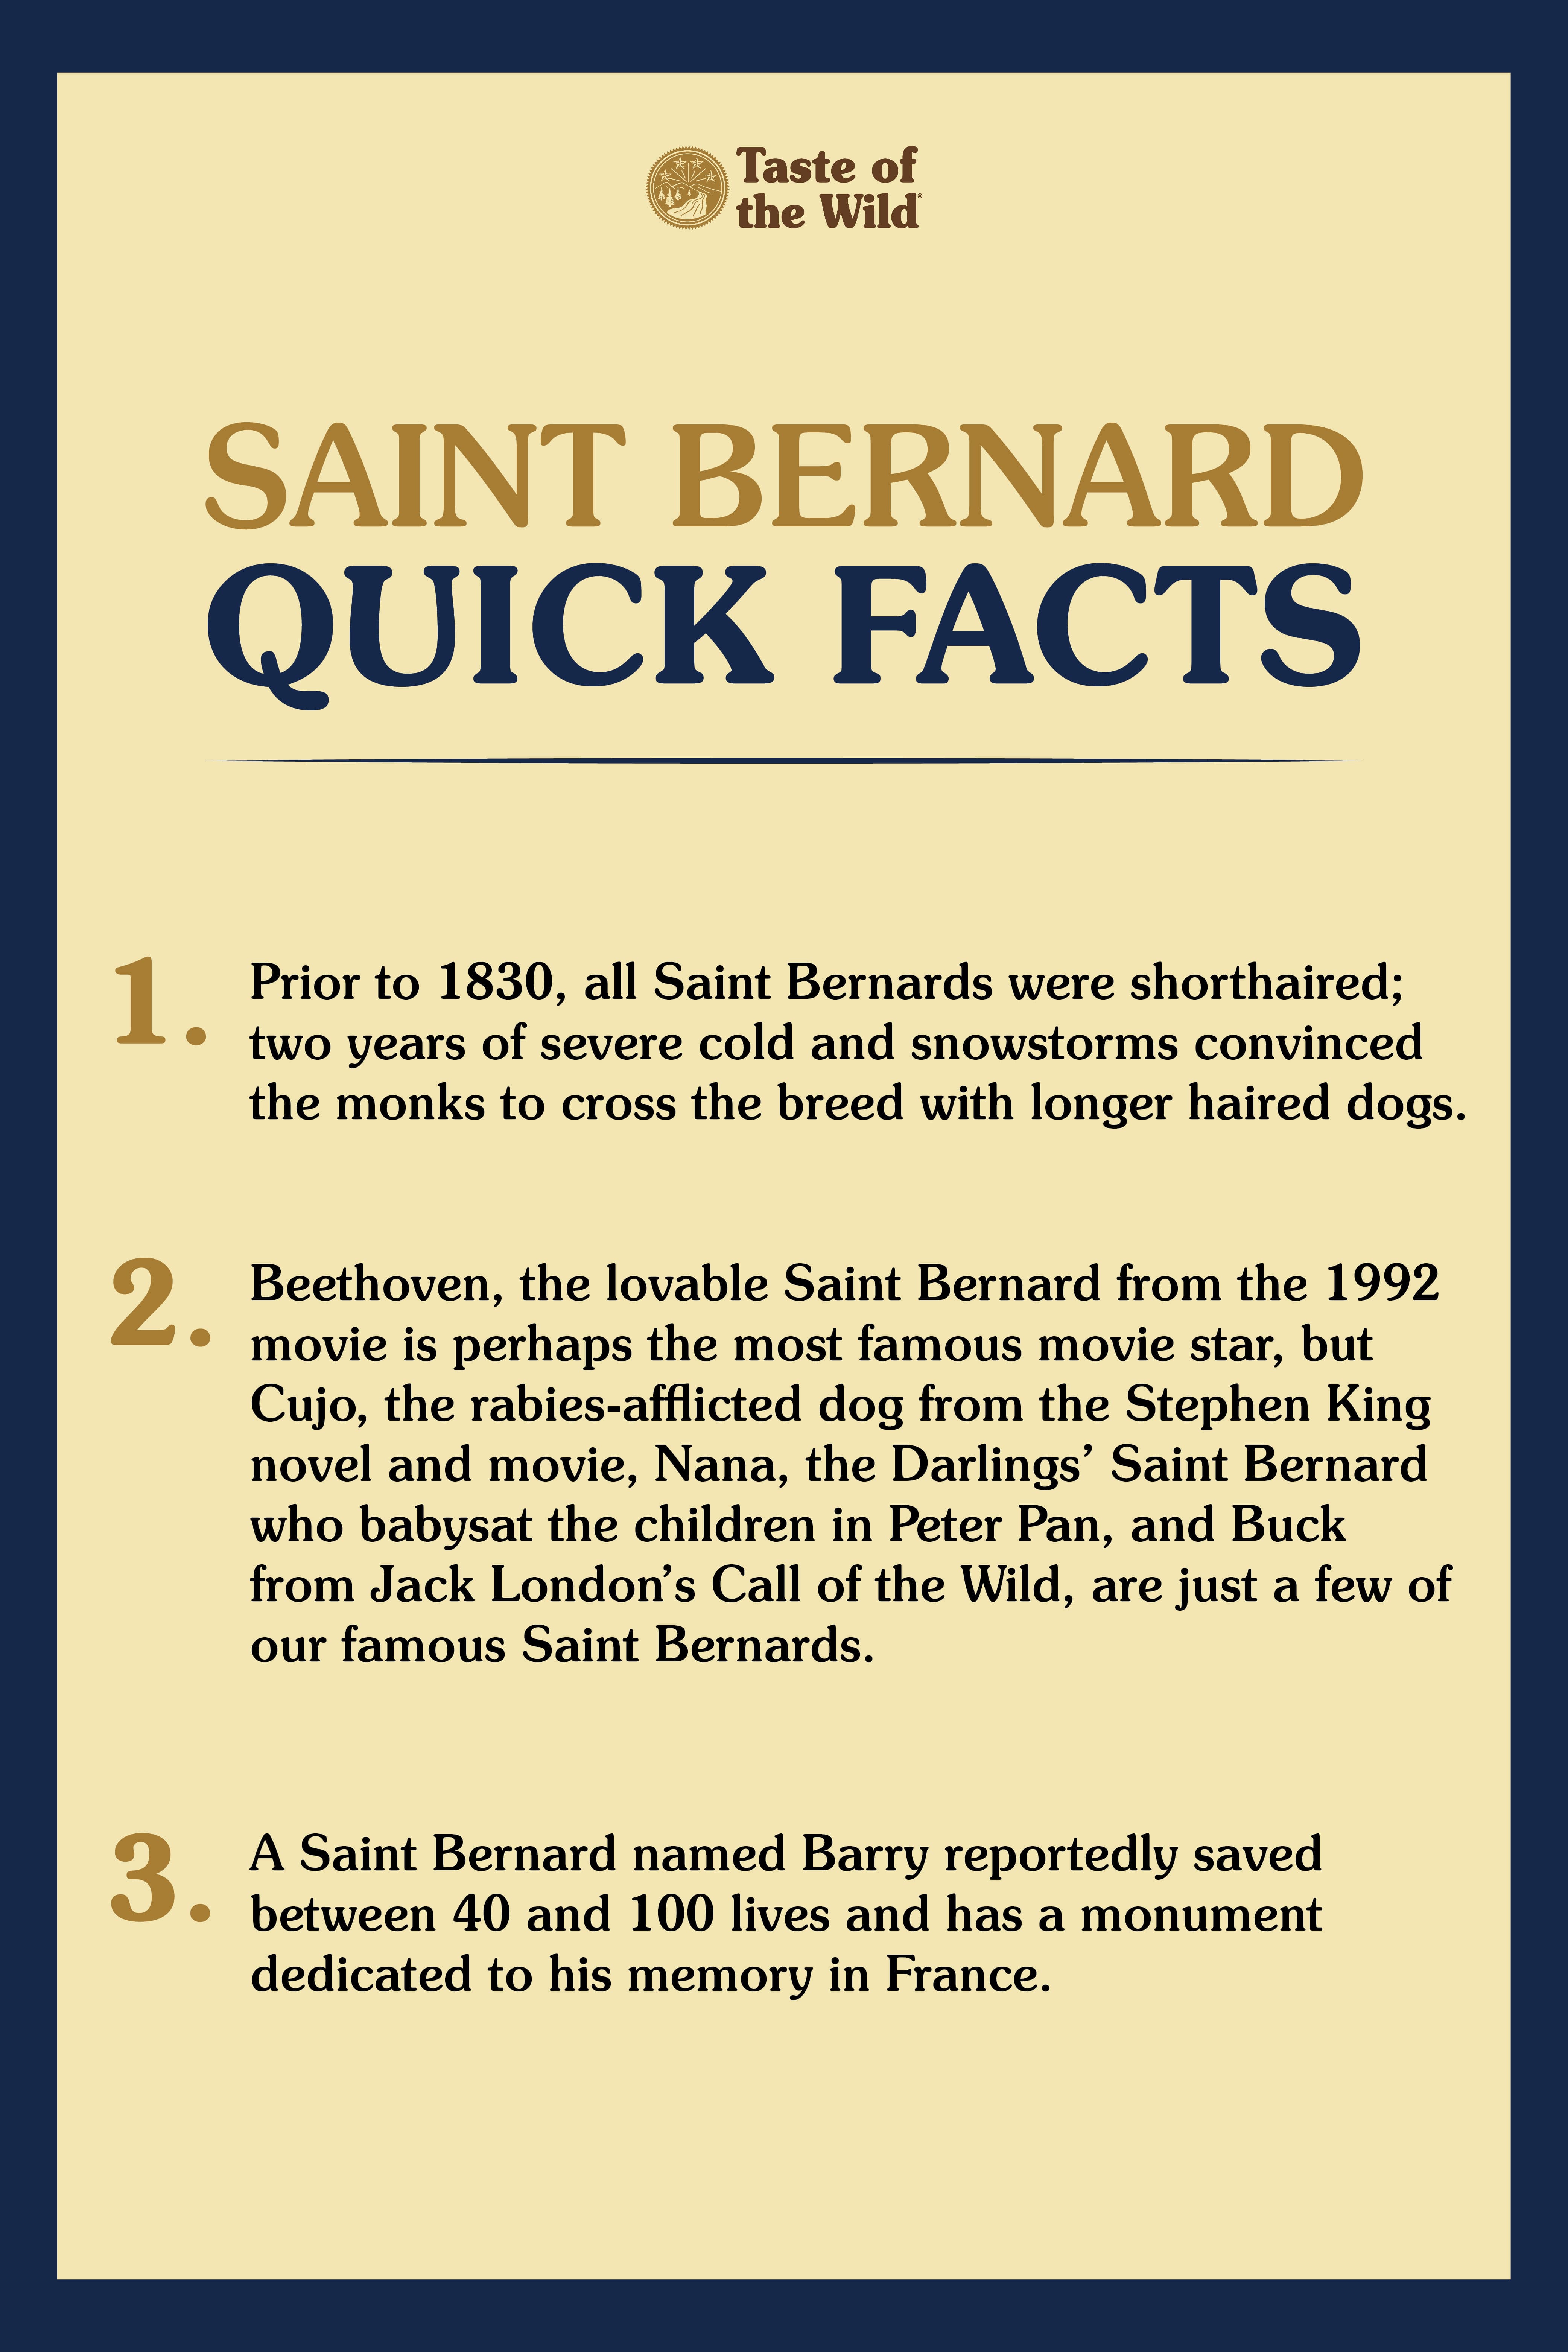 Saint Bernard Quick Facts Infographic | Taste of the Wild